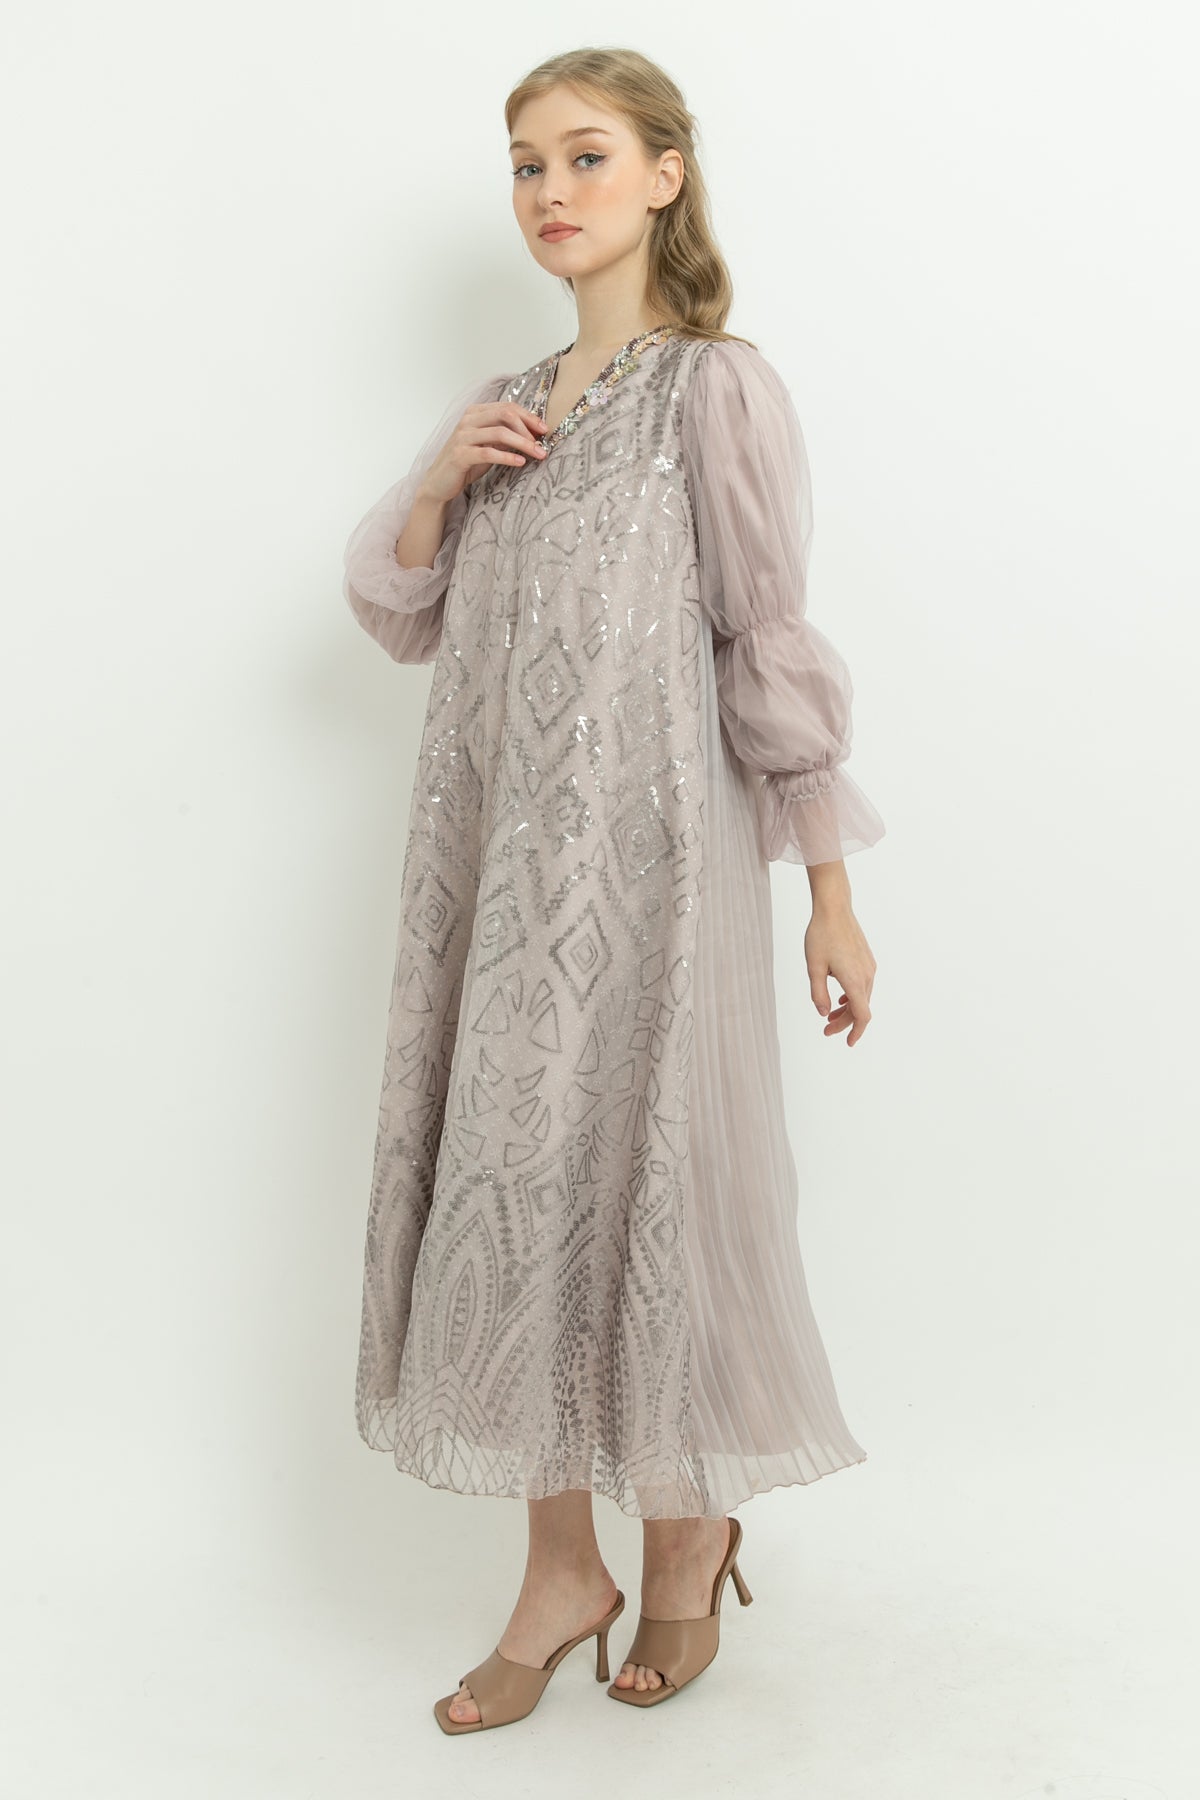 Briana Dress in Lilac